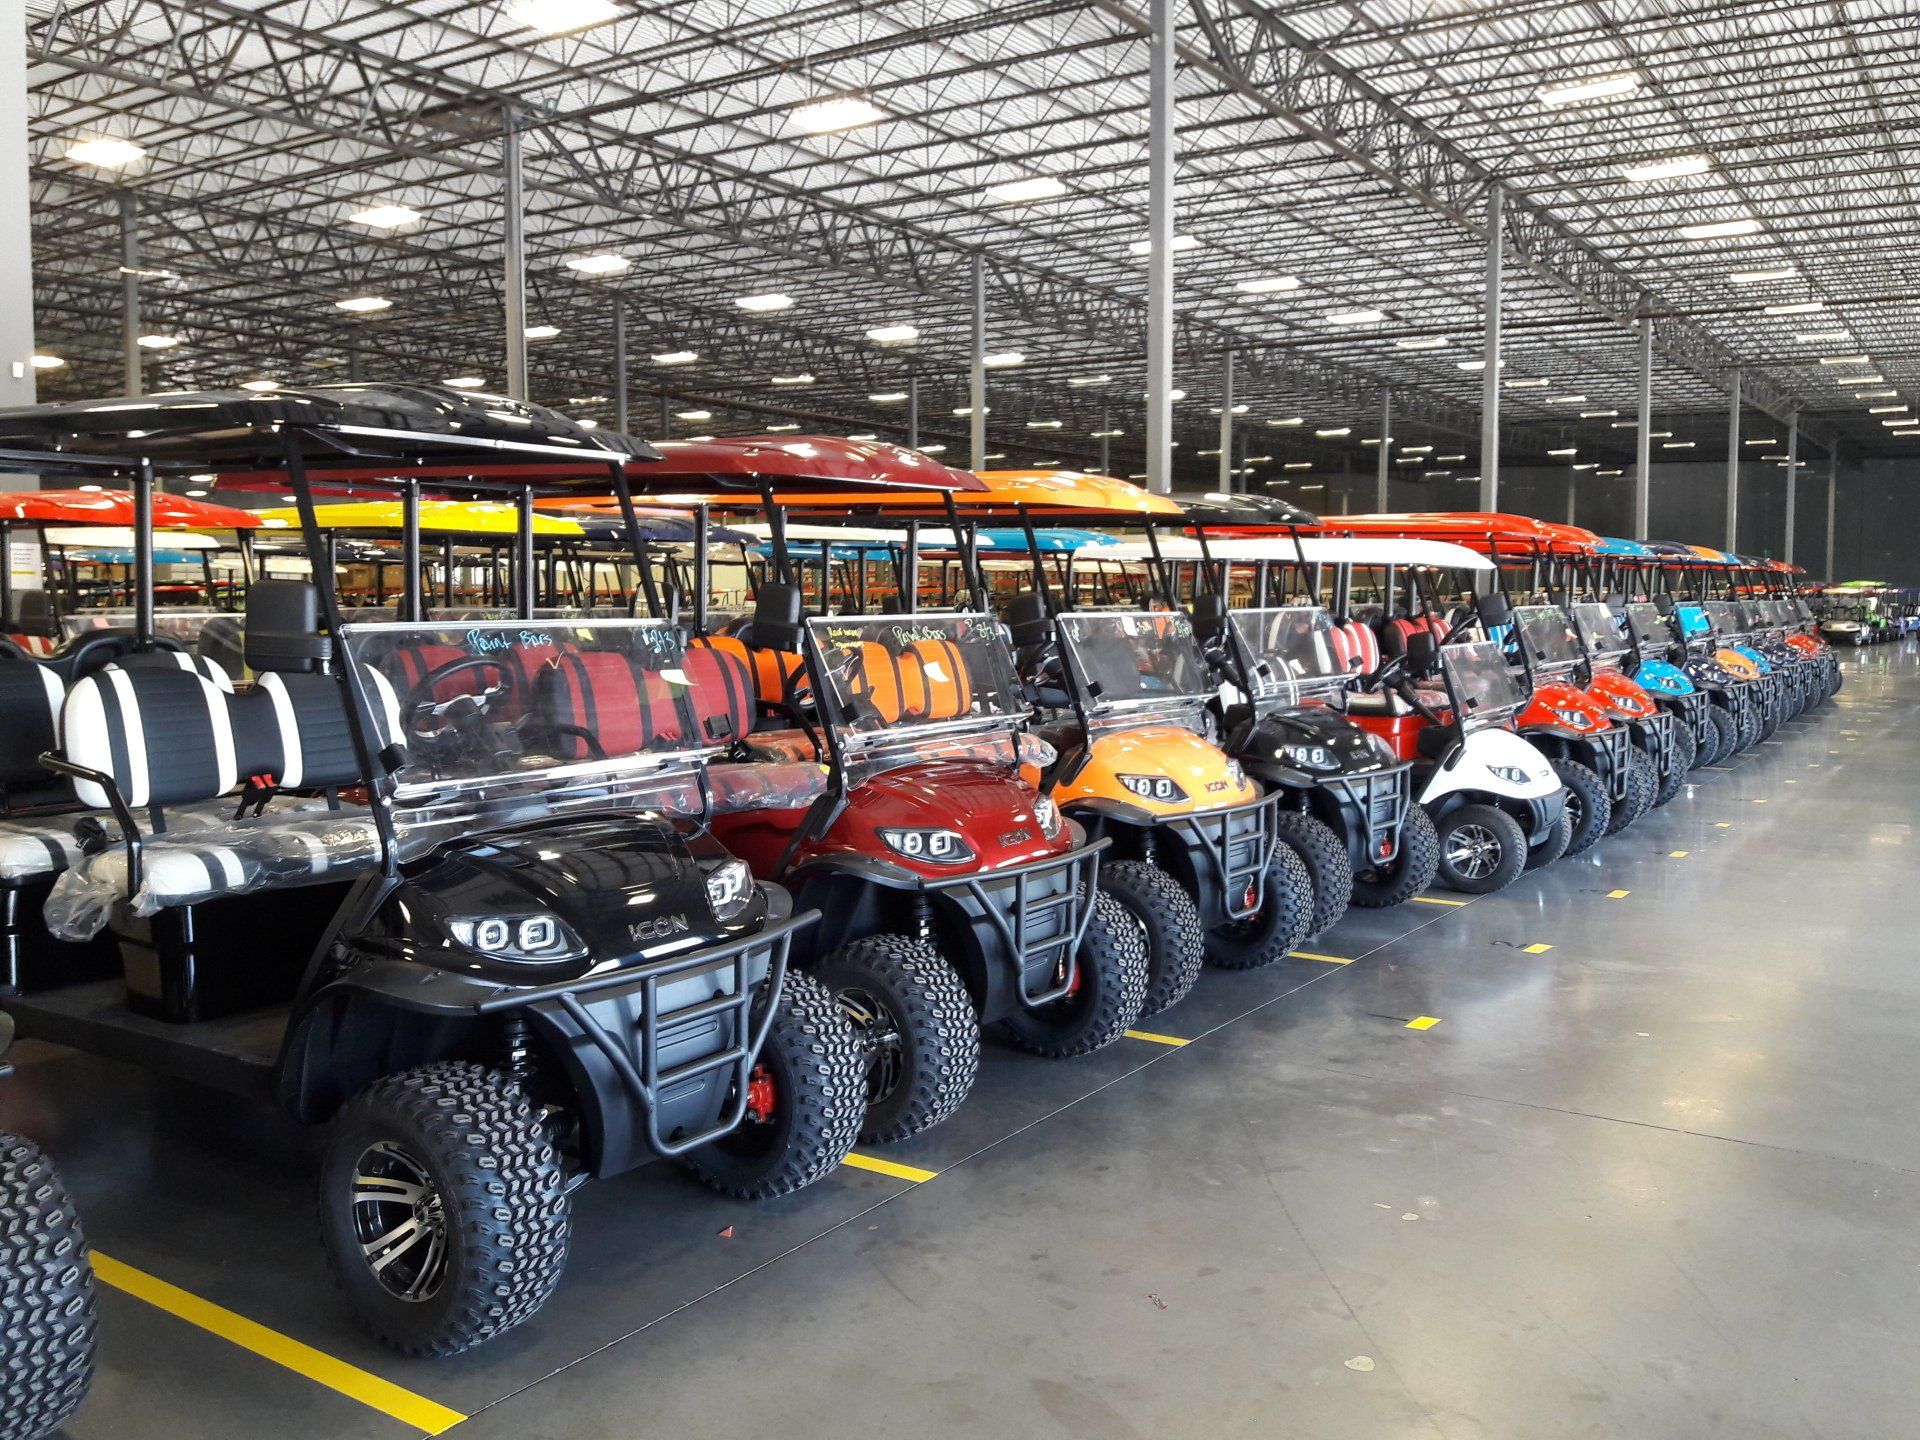 Golf Carts In Warehouse — St. Petersburg, FL — Ed Burns Bay Area Golf Cars